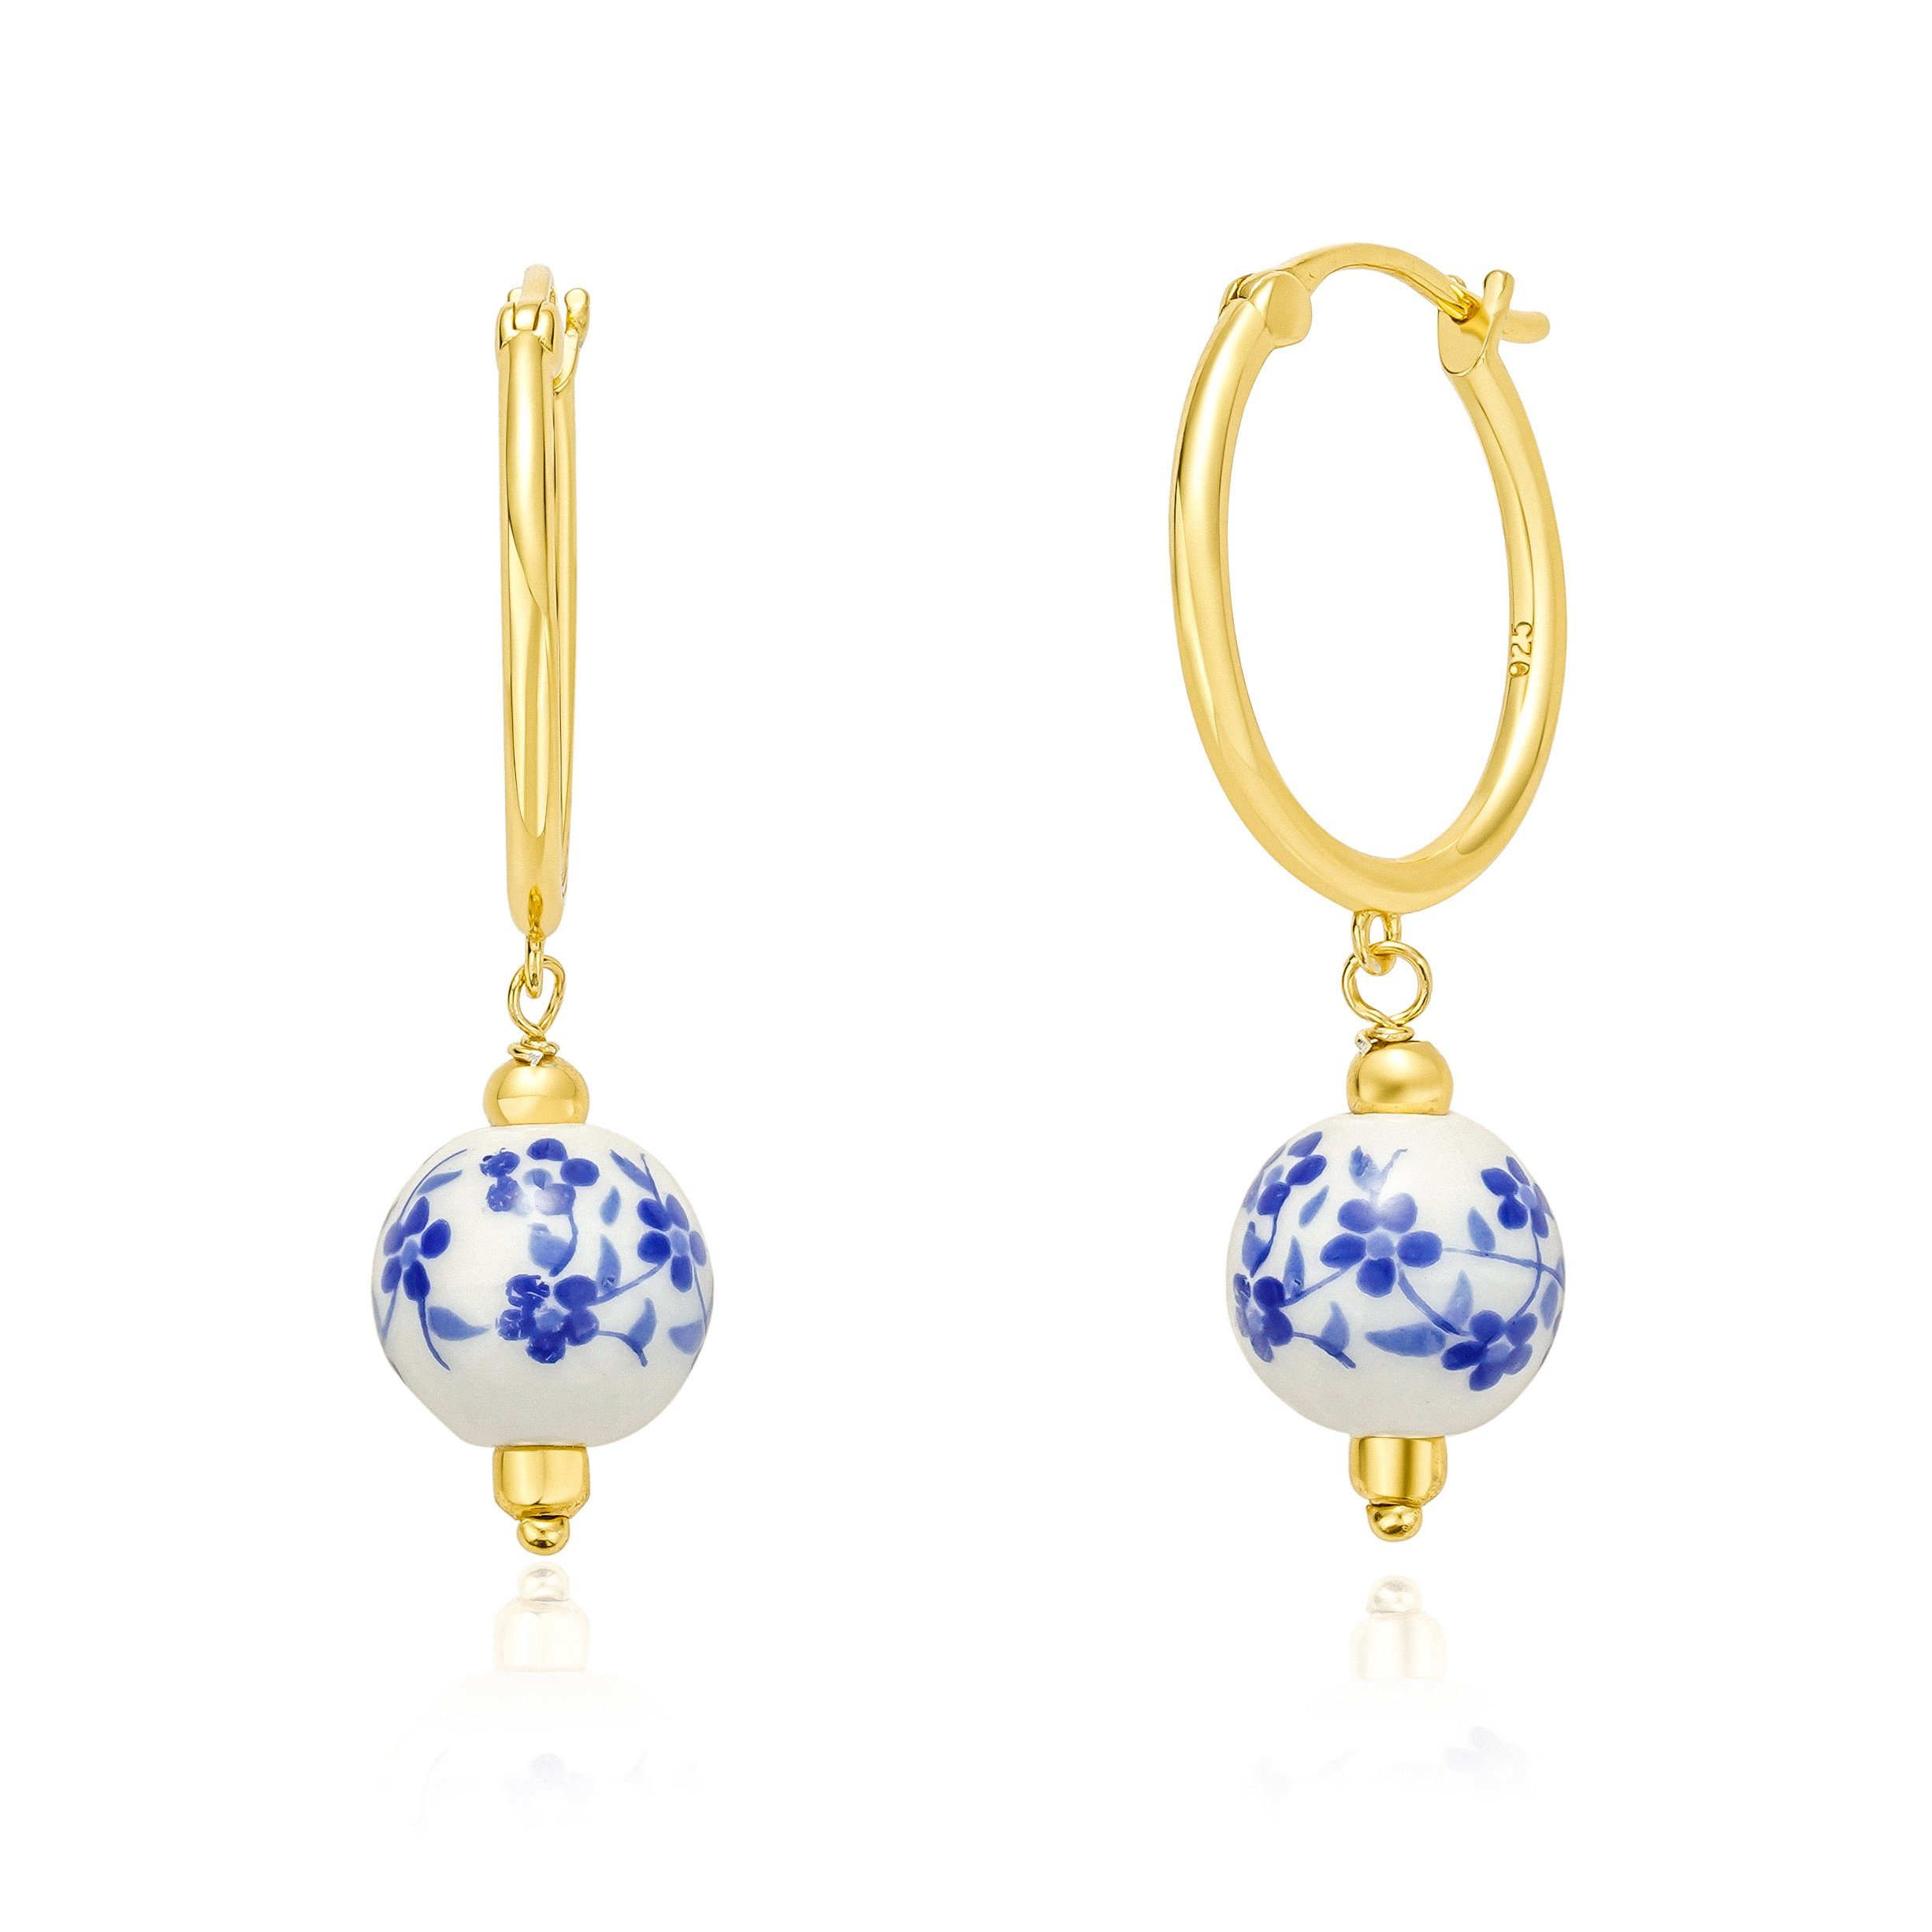 Brandlinger Paar Ohrhänger Ohrringe Nantes, mit Anhänger Keramik Perle,  Blüten blau weiß